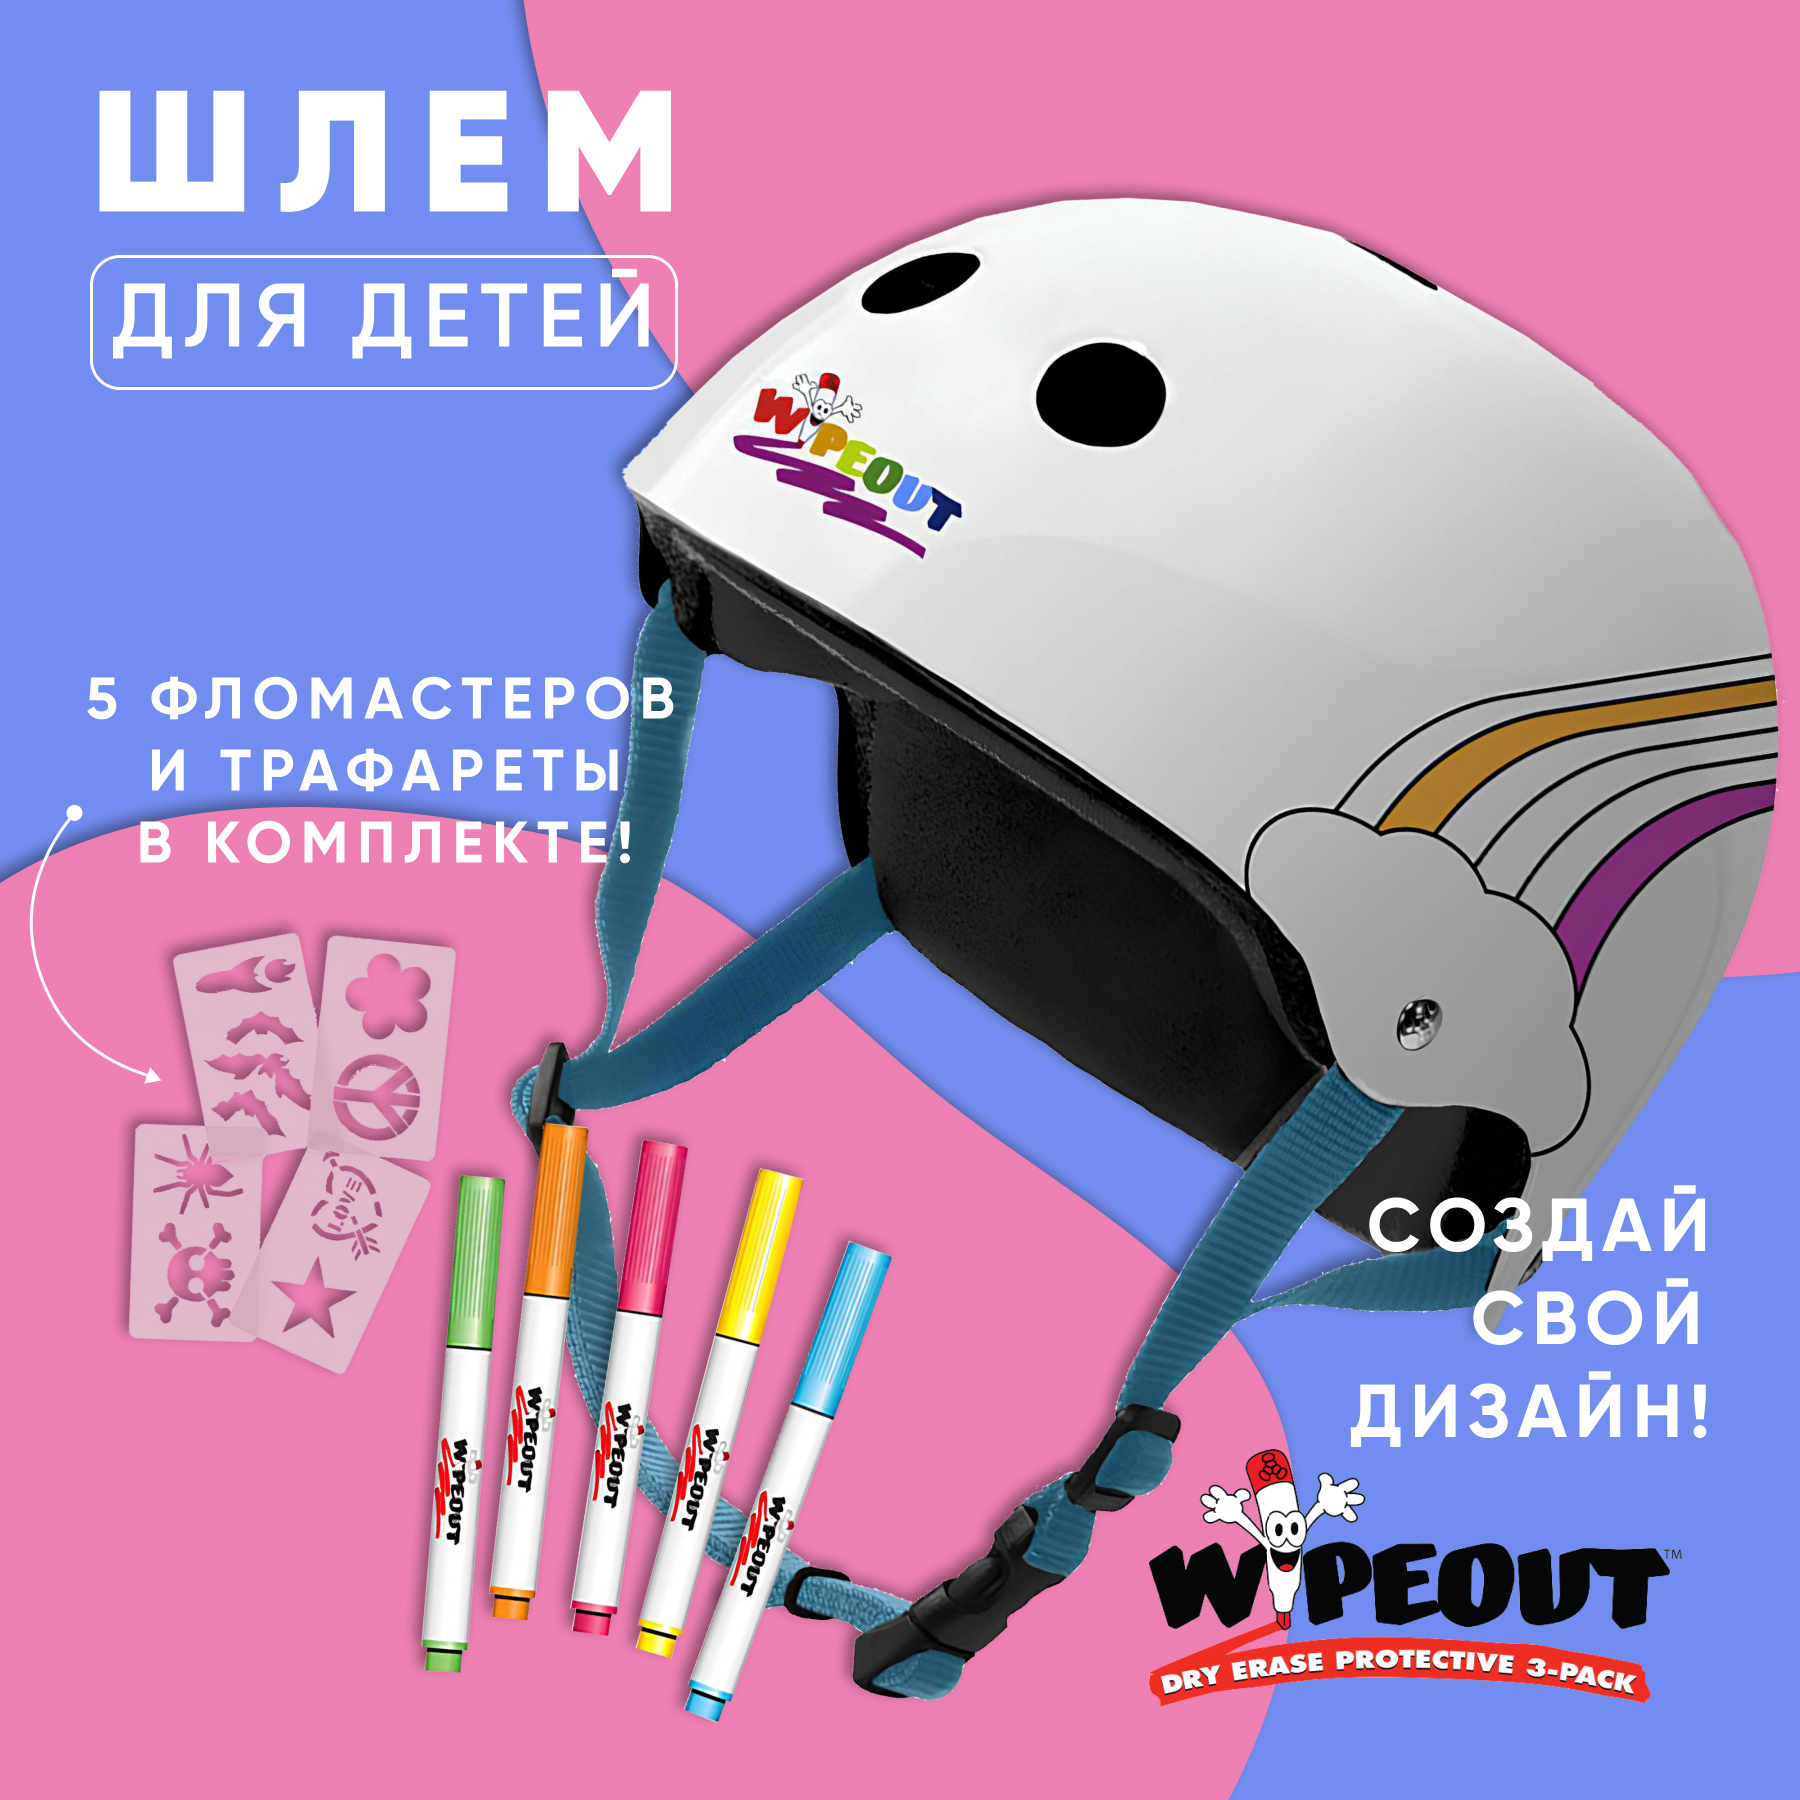 Шлем защитный спортивный WIPEOUT White Rainbow с фломастерами и трафаретами размер M 5+ обхват головы 49-52 см - фото 2